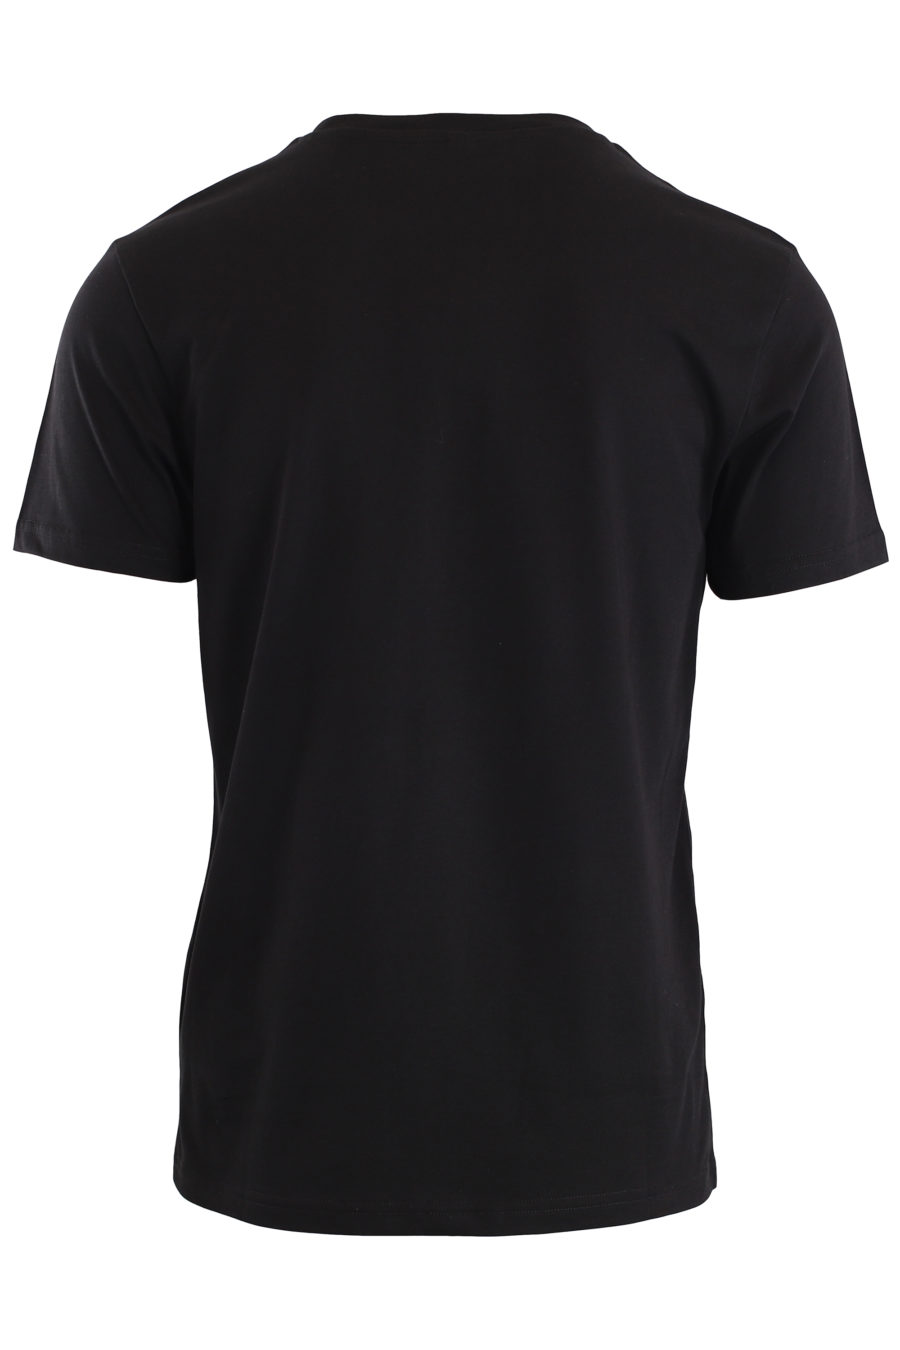 Camiseta negra con logo playero multicolor - IMG 9475